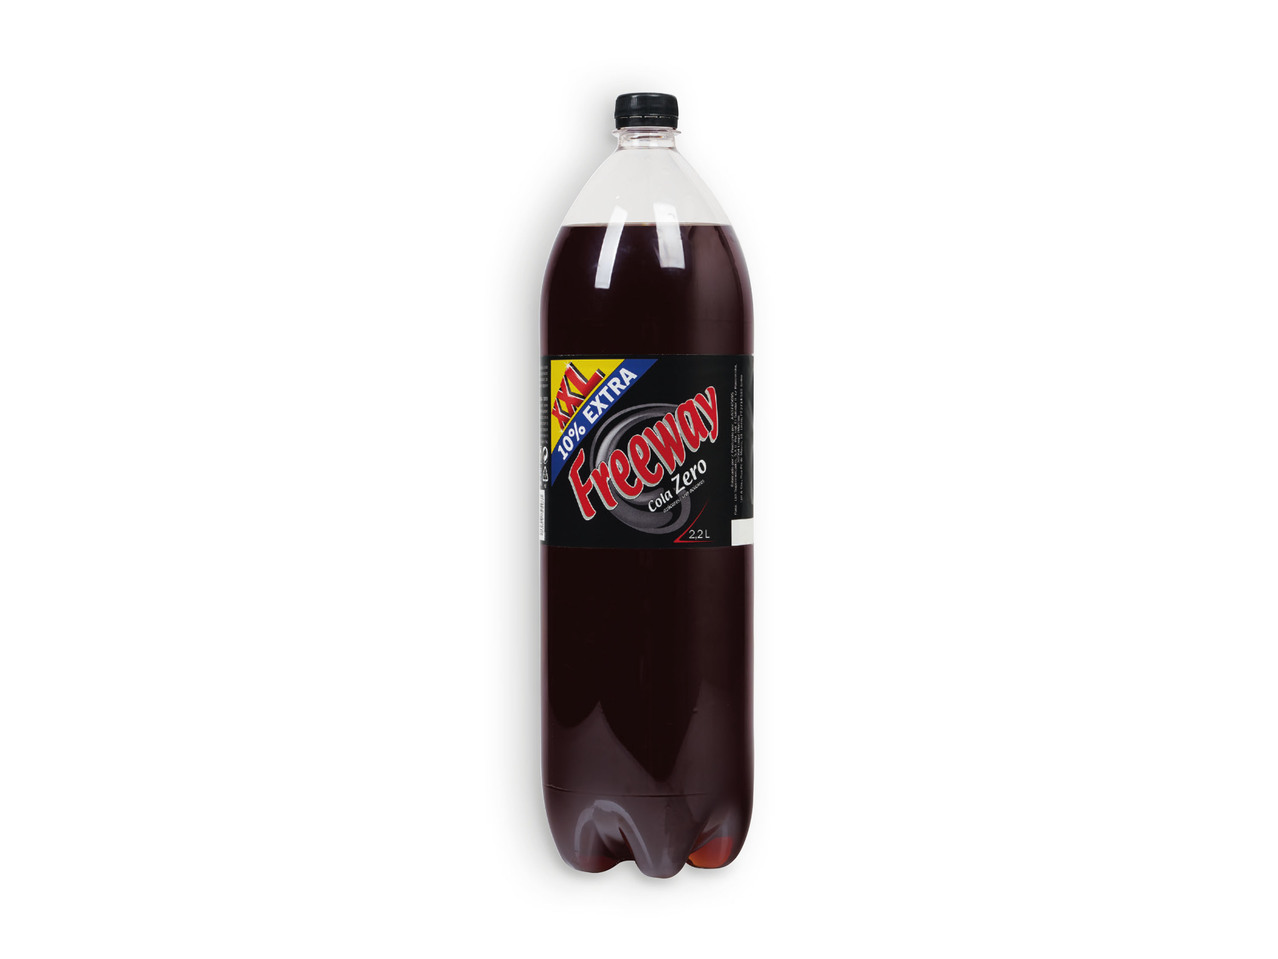 FREEWAY(R) Cola Zero